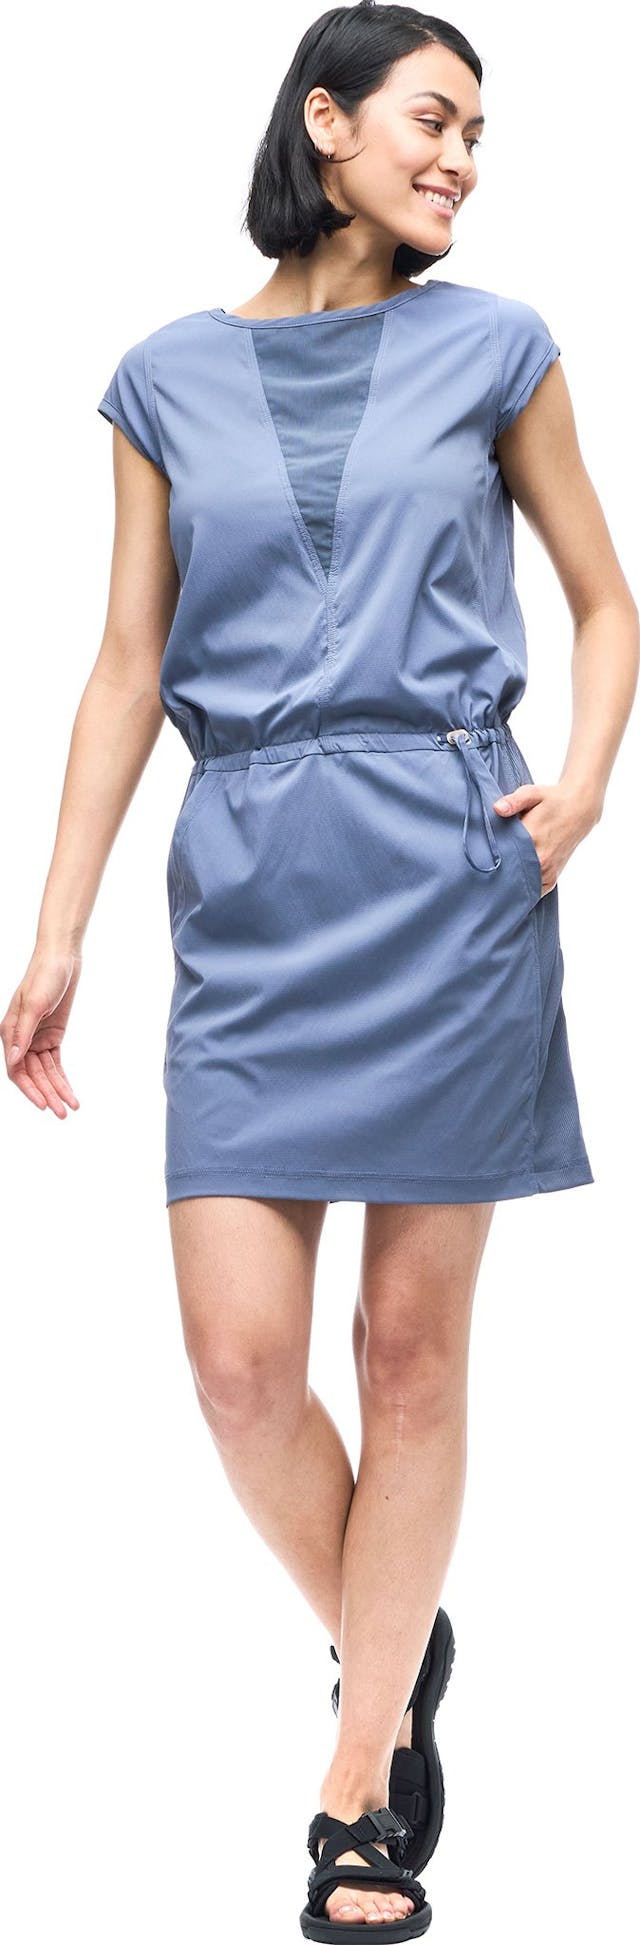 Product image for Laco III Knee Length Sleeveless Dress - Women's